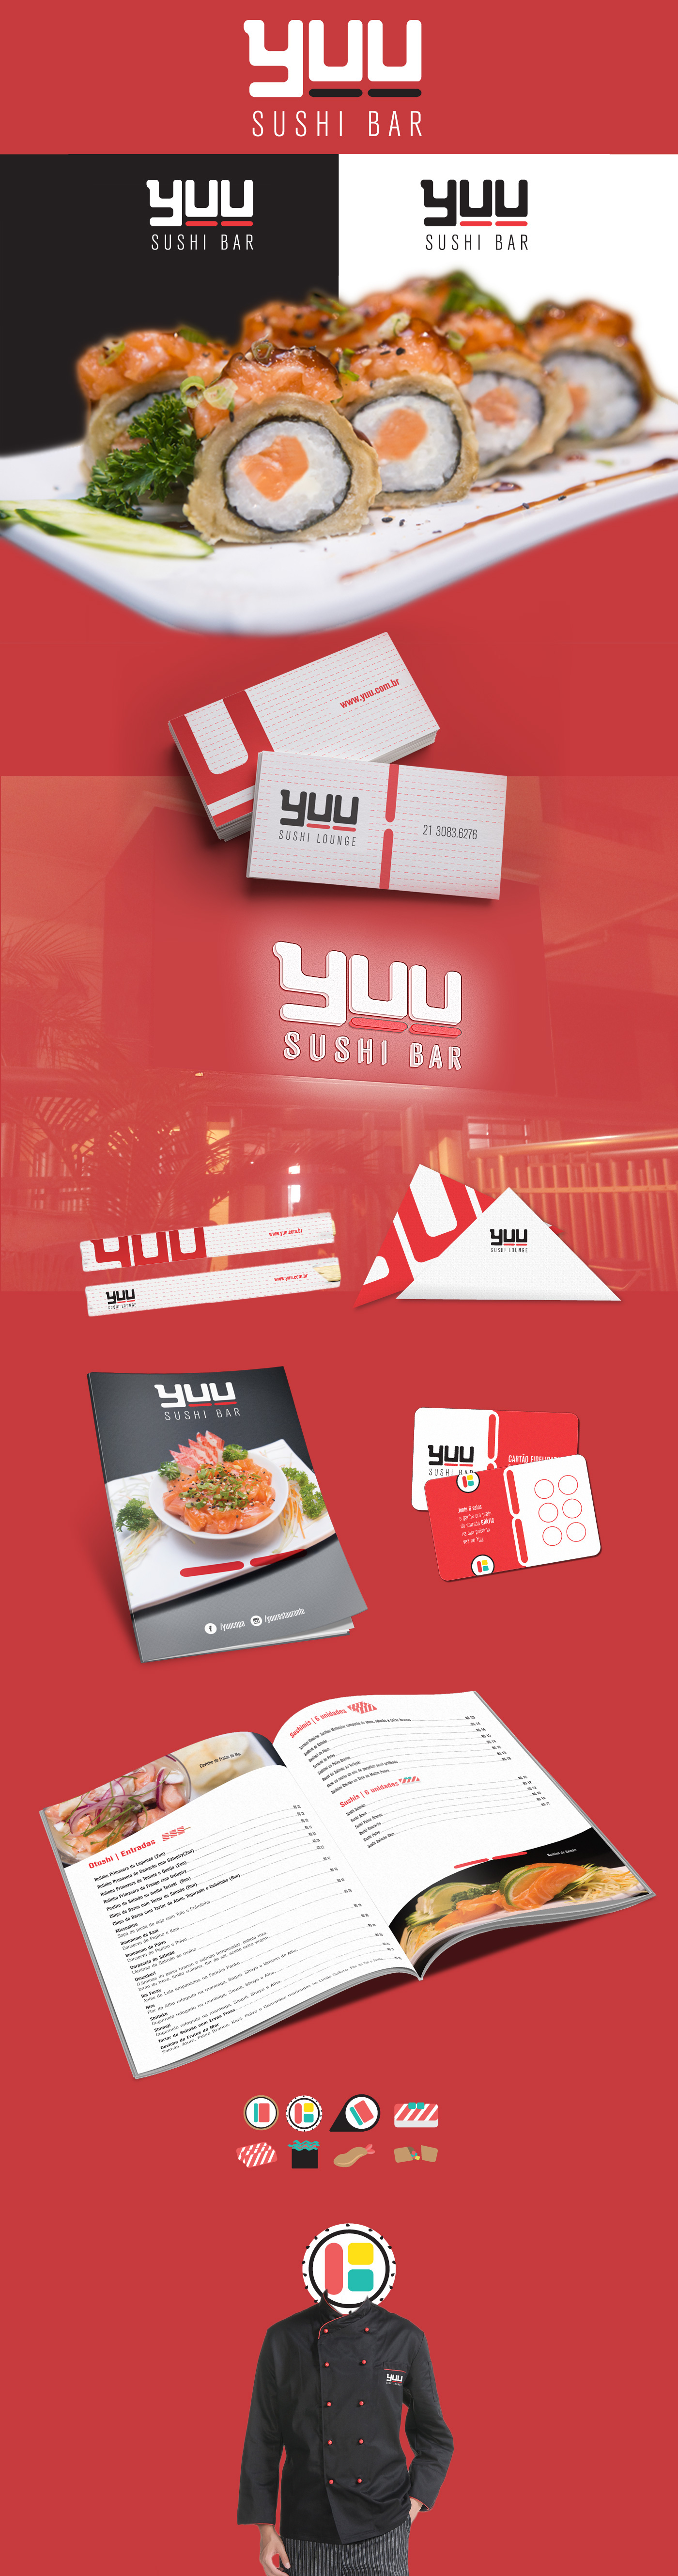 Sushi bar Yuu restaurante restaurant identidade visual